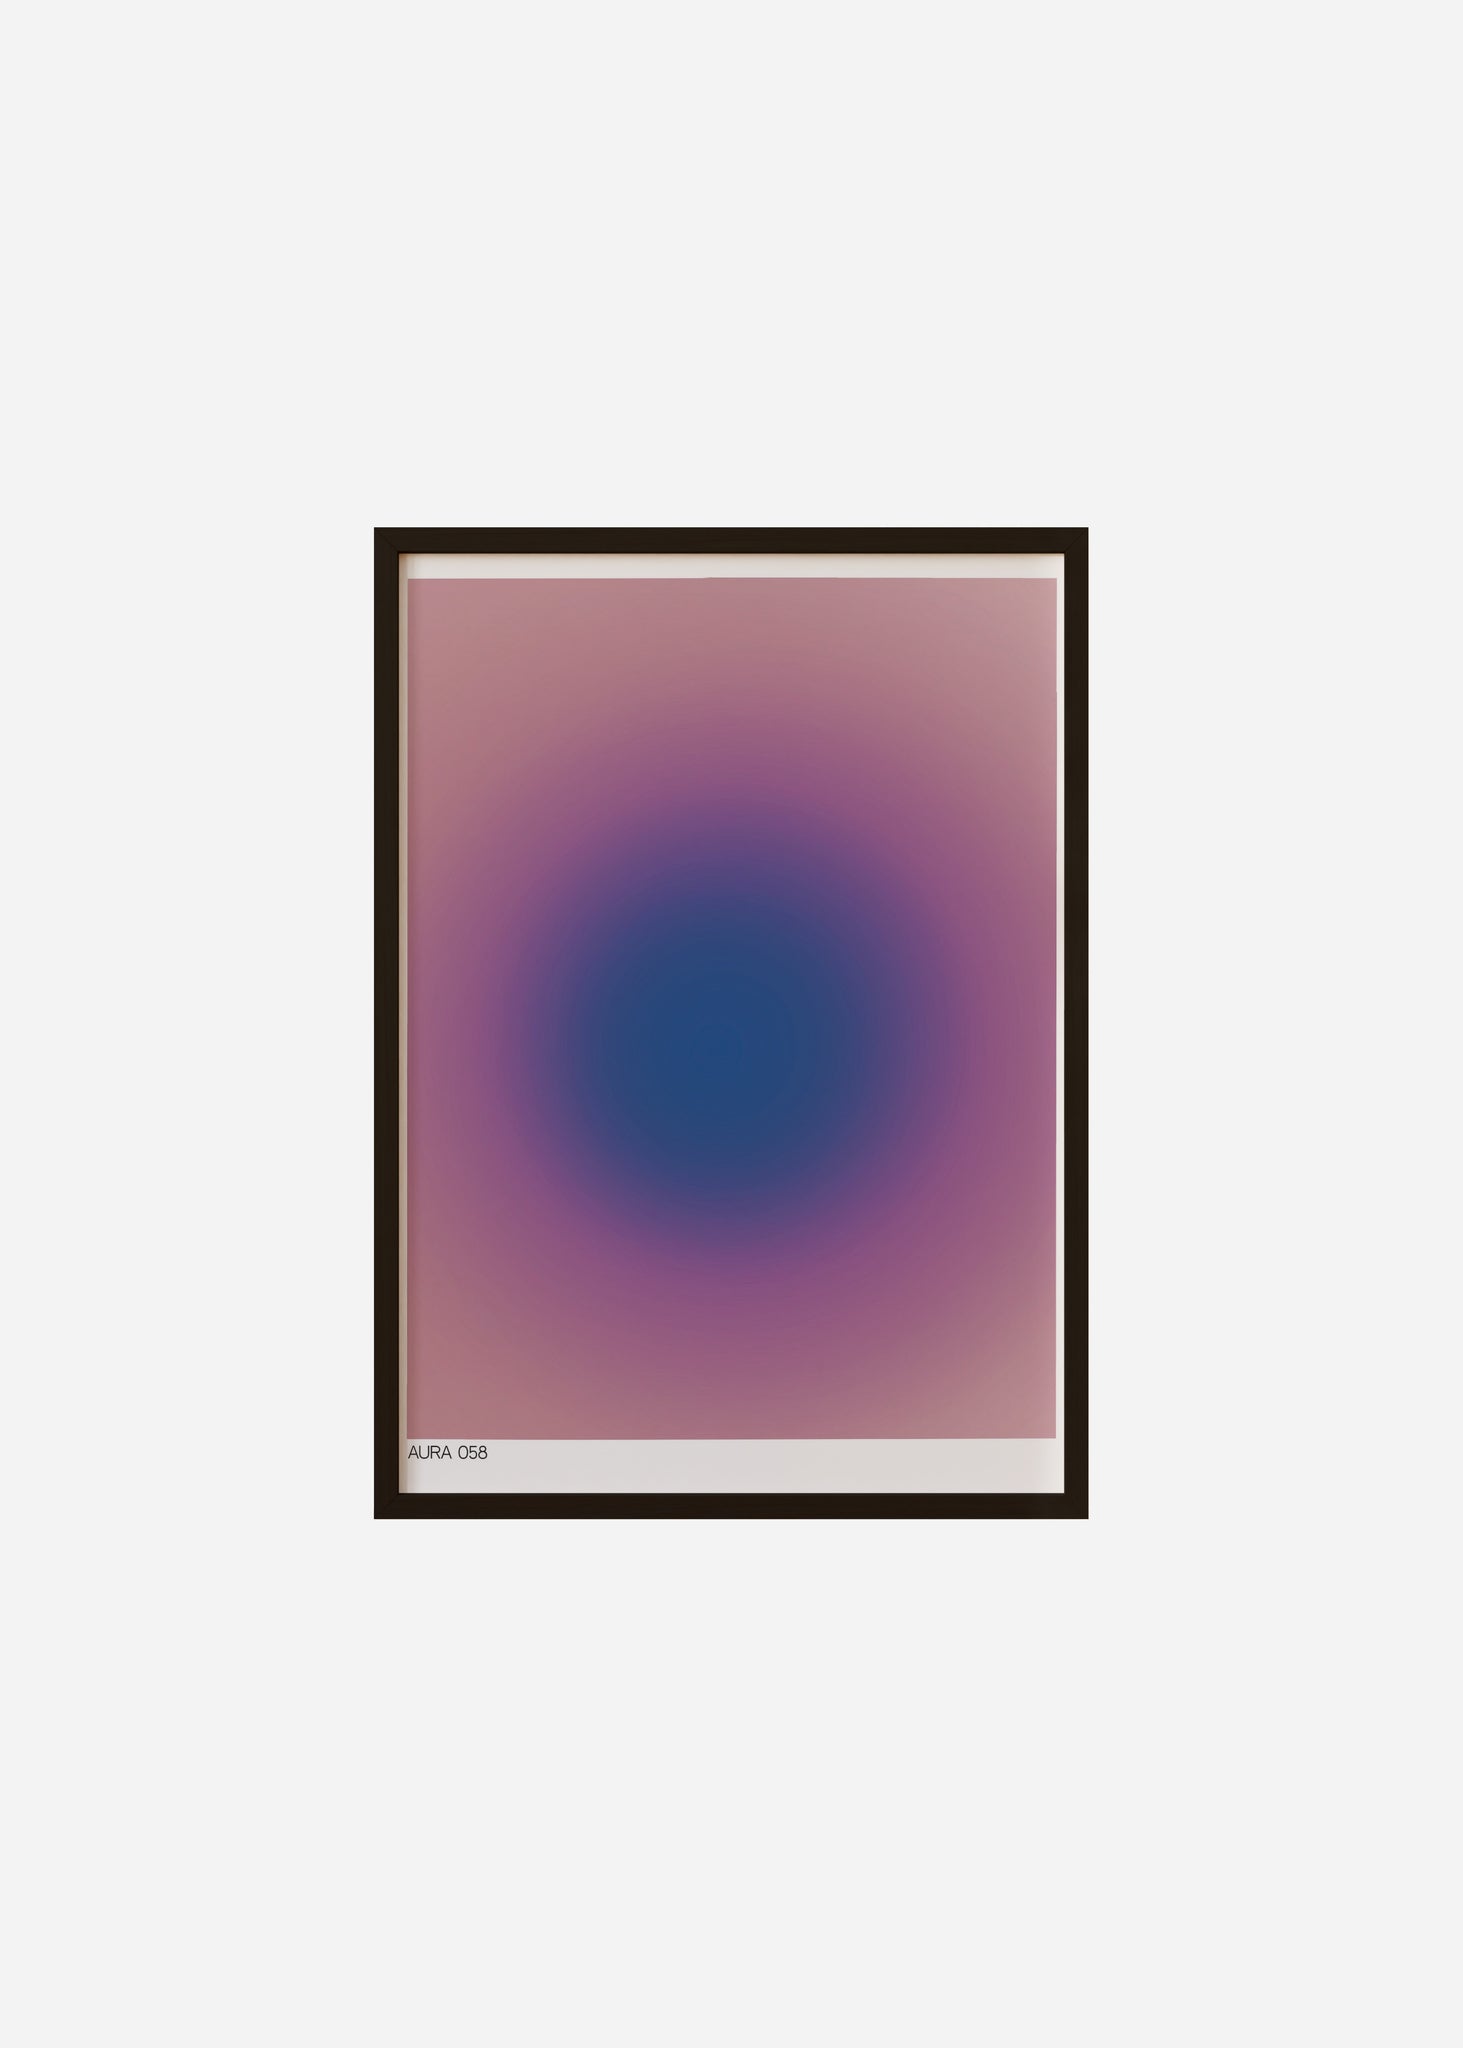 aura 058 Framed Print